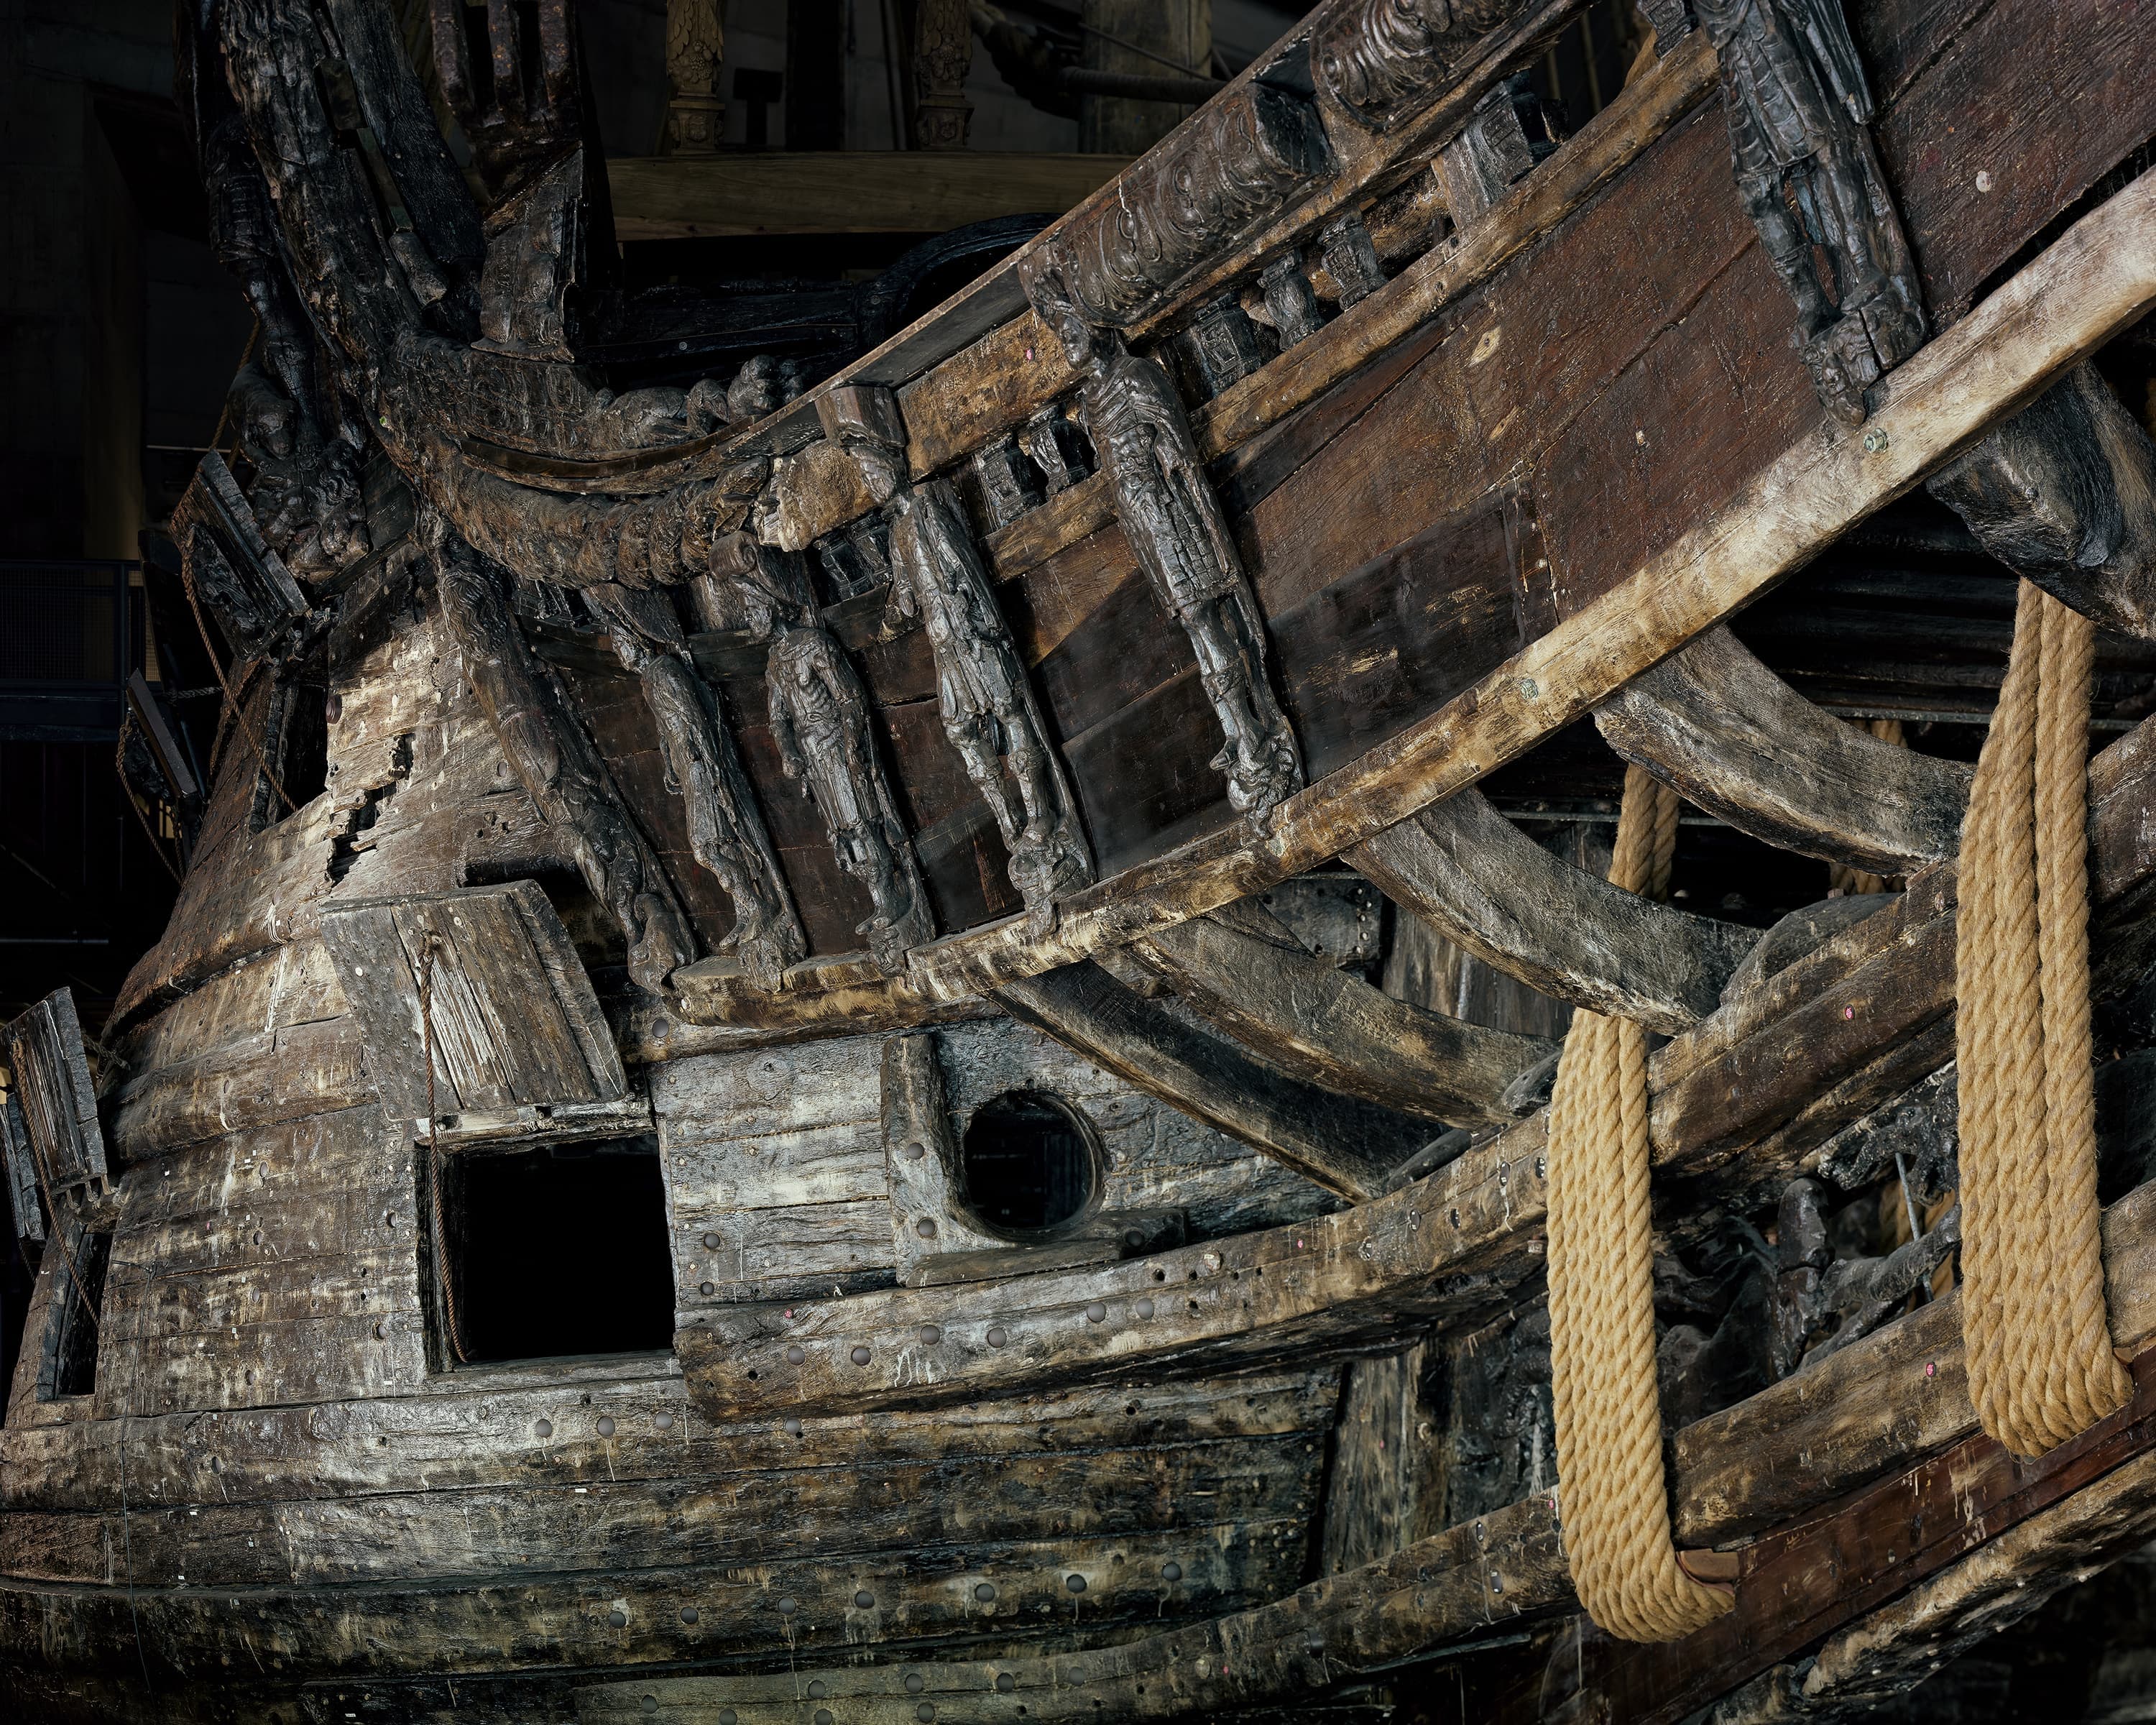 Starboard side of the Swedish warship Vasa.